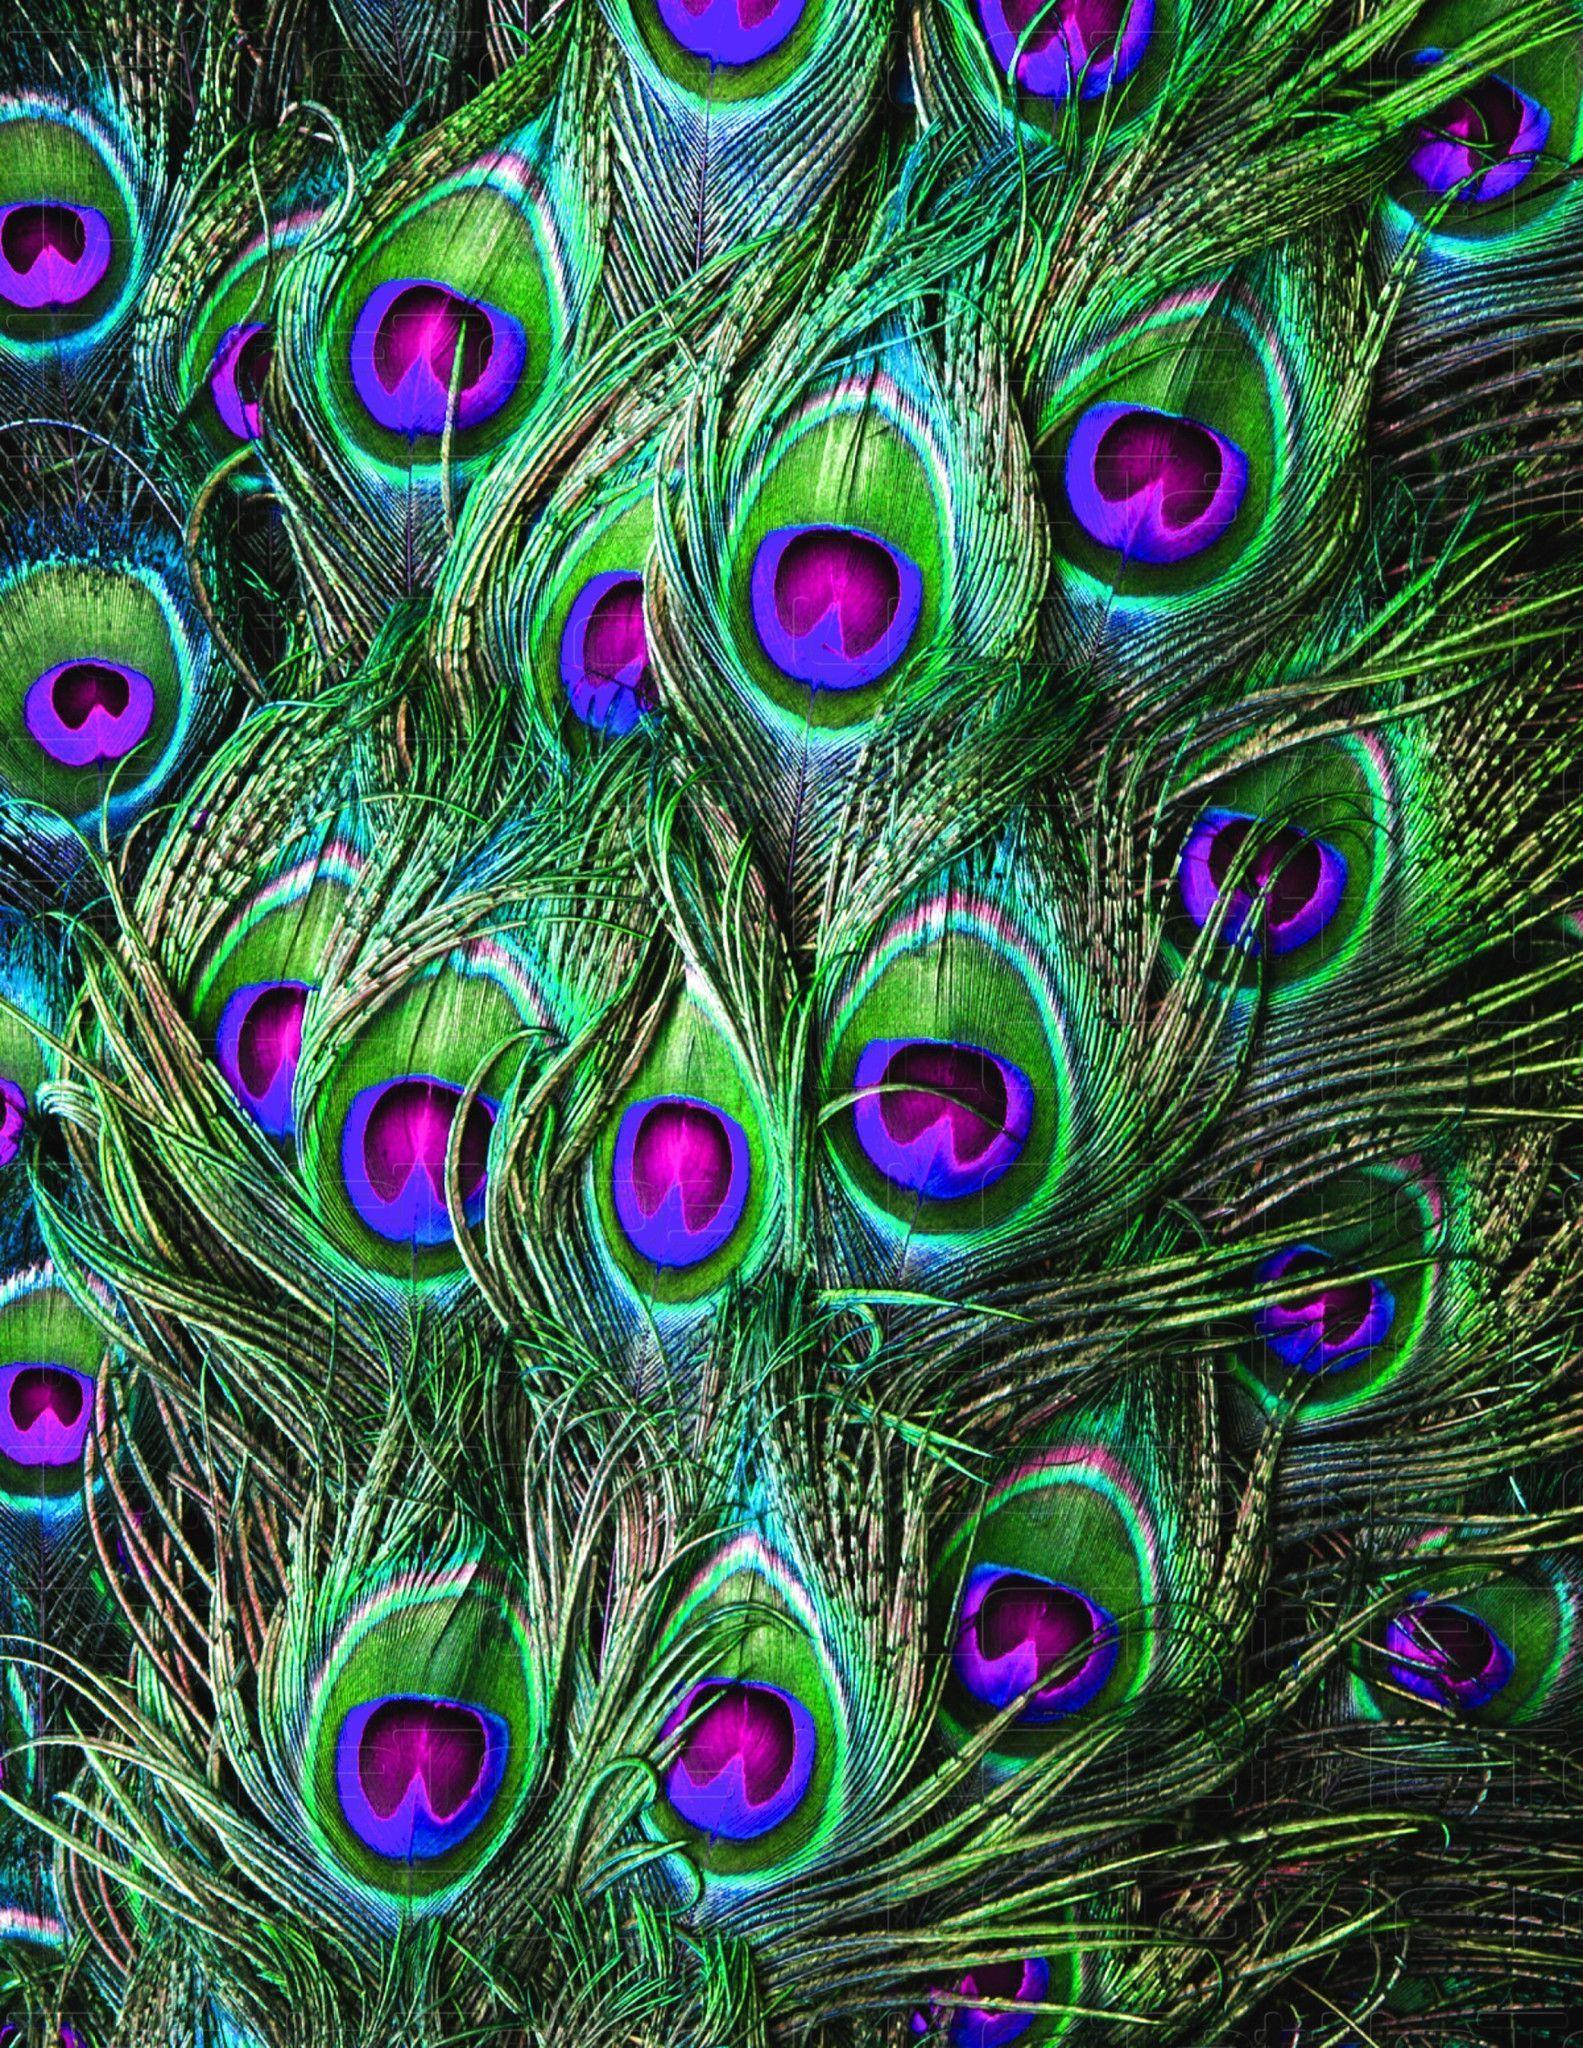 Pea 4. Peacocks, Feathers and Bird